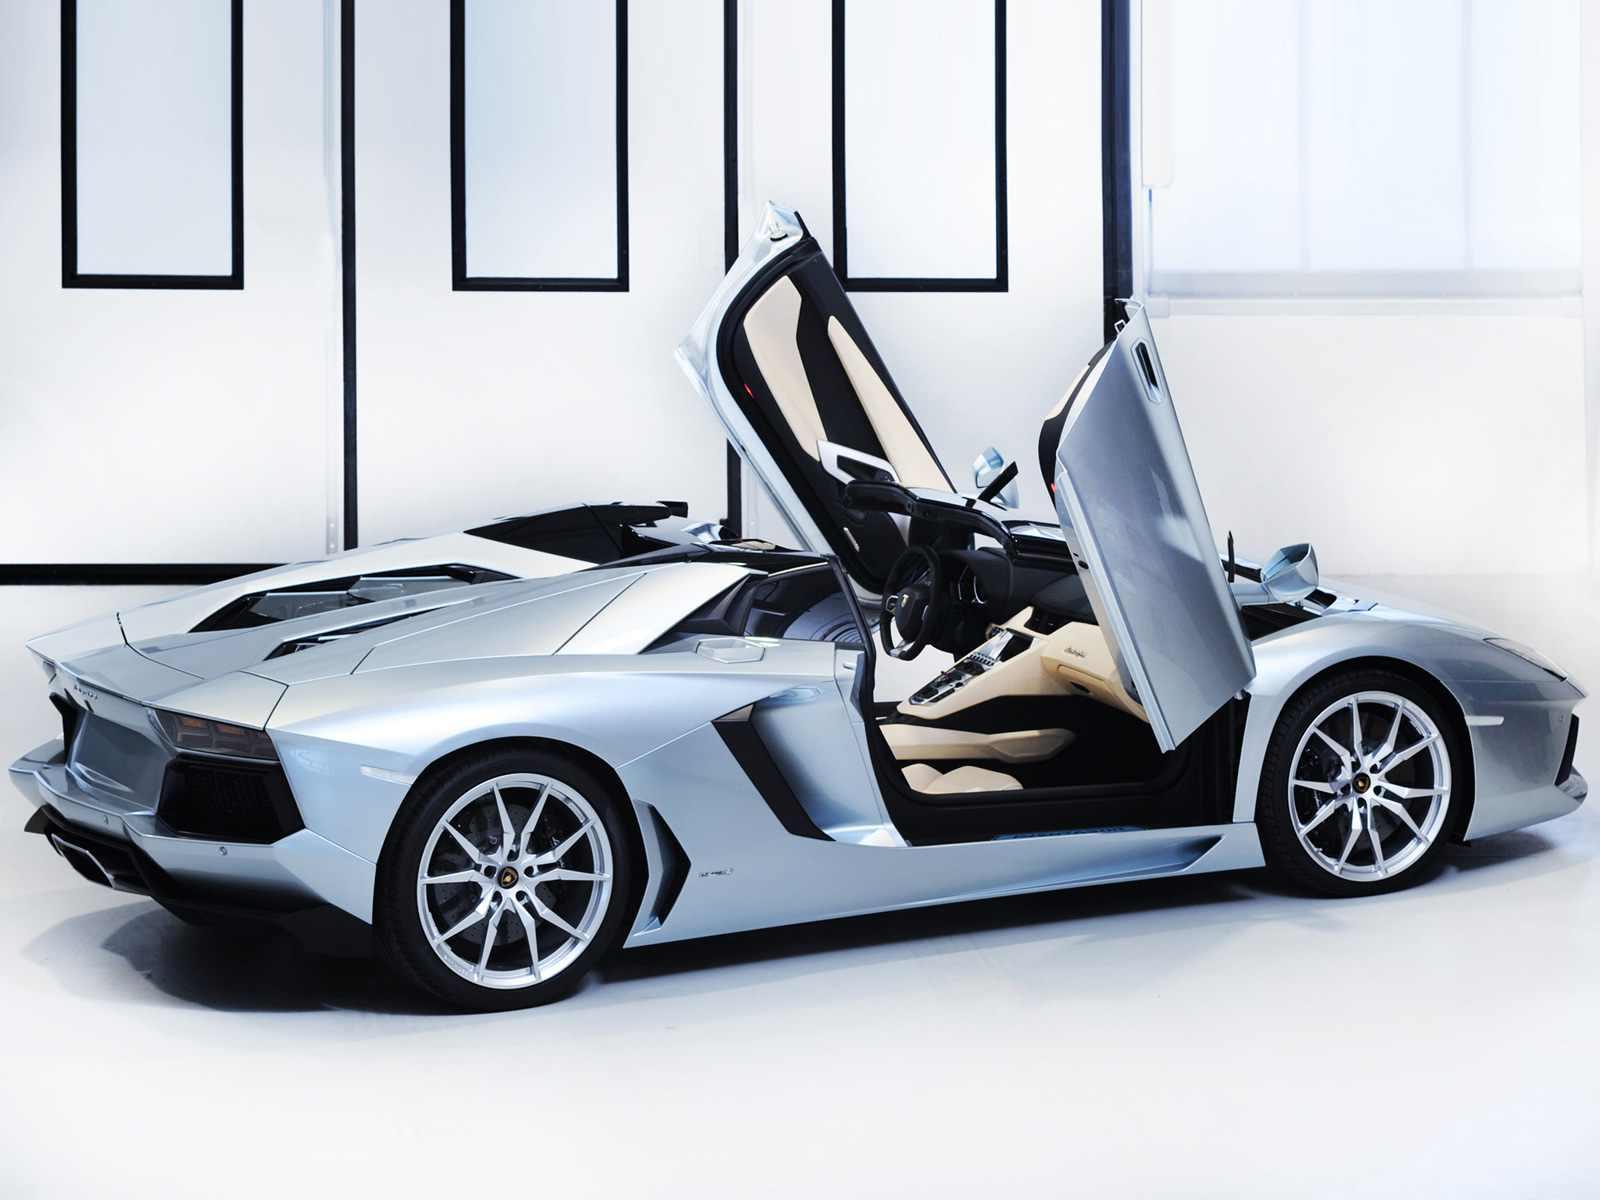 2013-Lamborghini-Aventador-LP-700-4-Roadster-Rear-Side                                                                                                